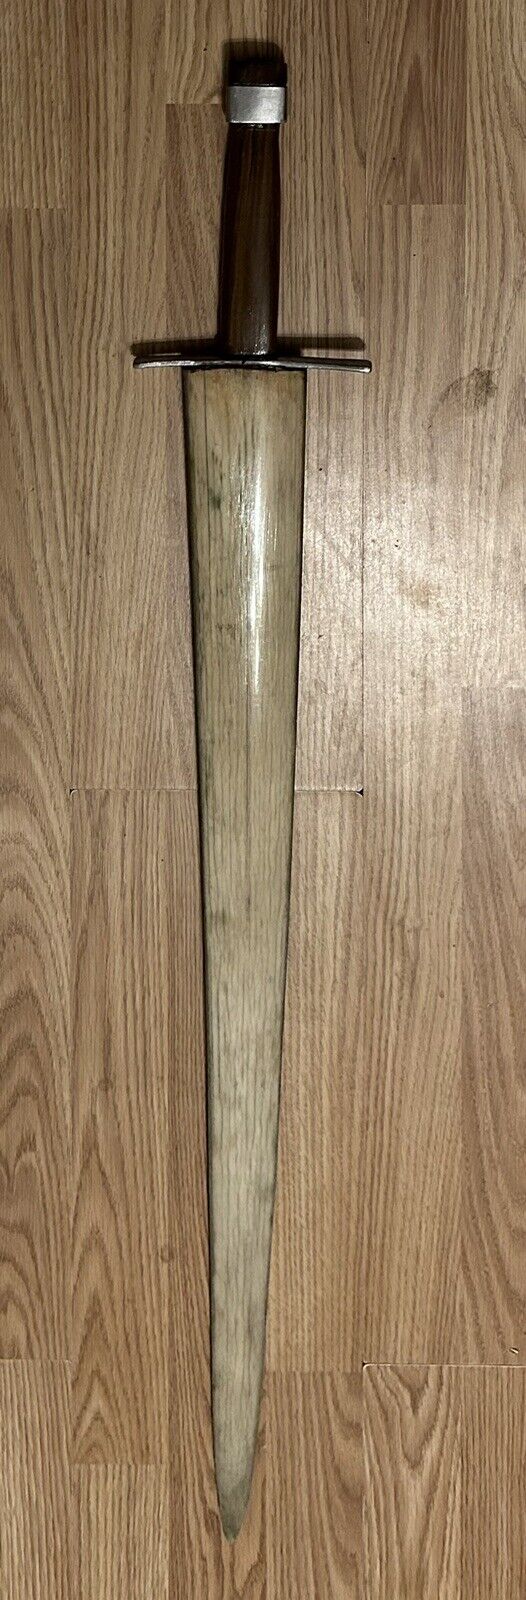 Swordfish Bill Sword Handcrafted Viking Sword,￼ ￼ ￼ Handle made From Tiki Wood